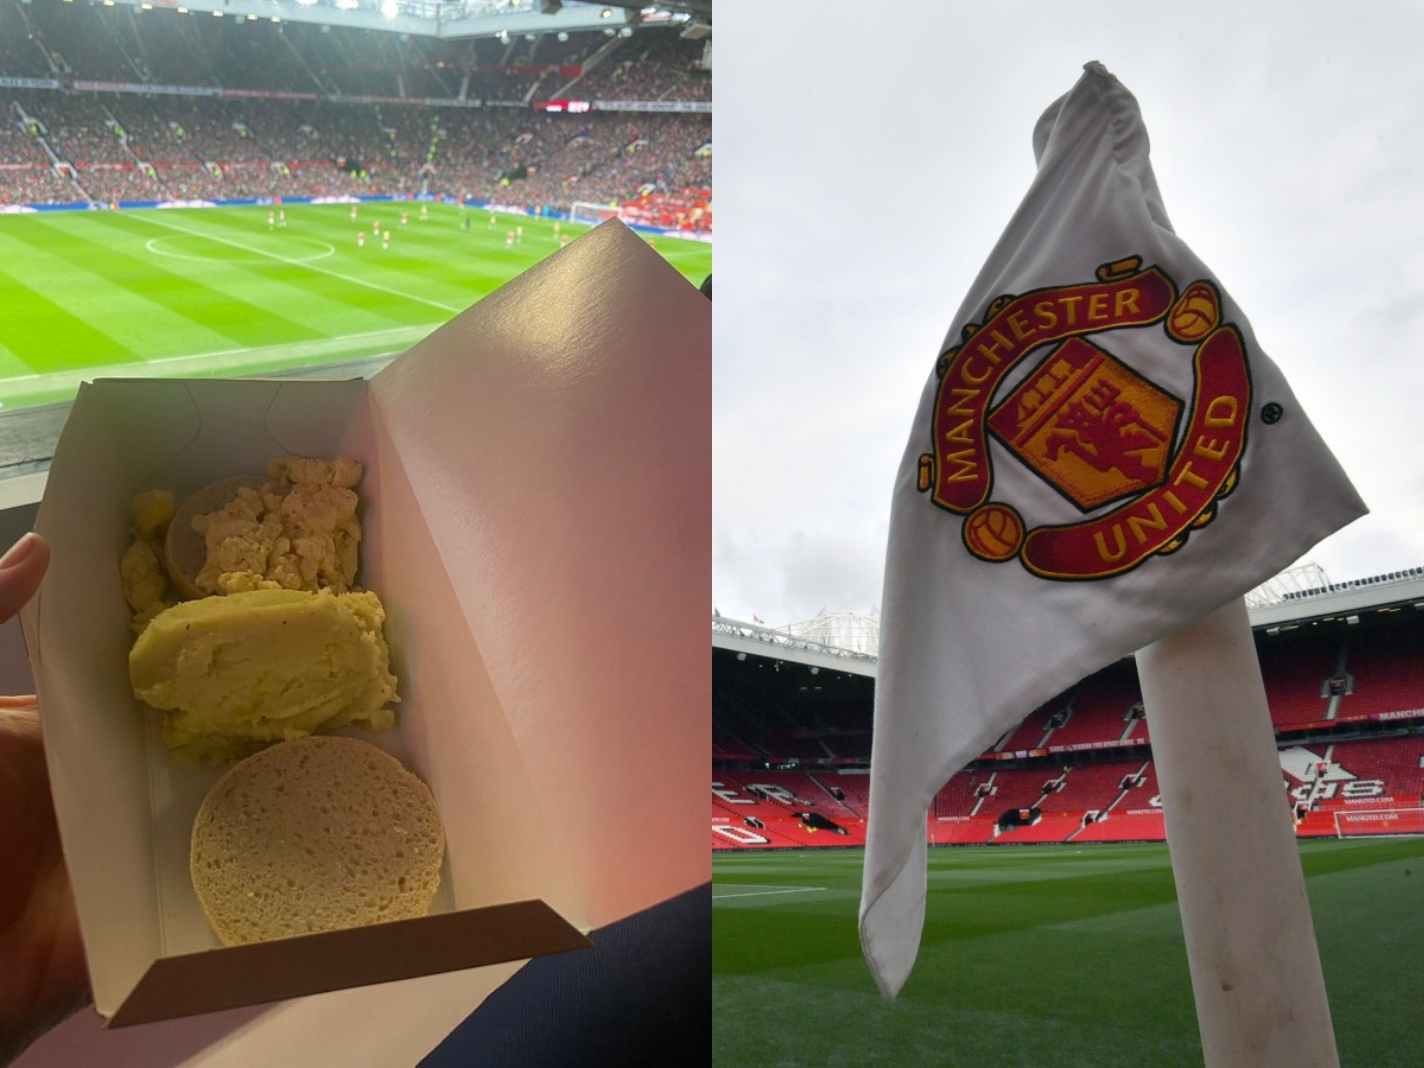 Man Utd avoid PR disaster using steaks after food gaffe at Old Trafford